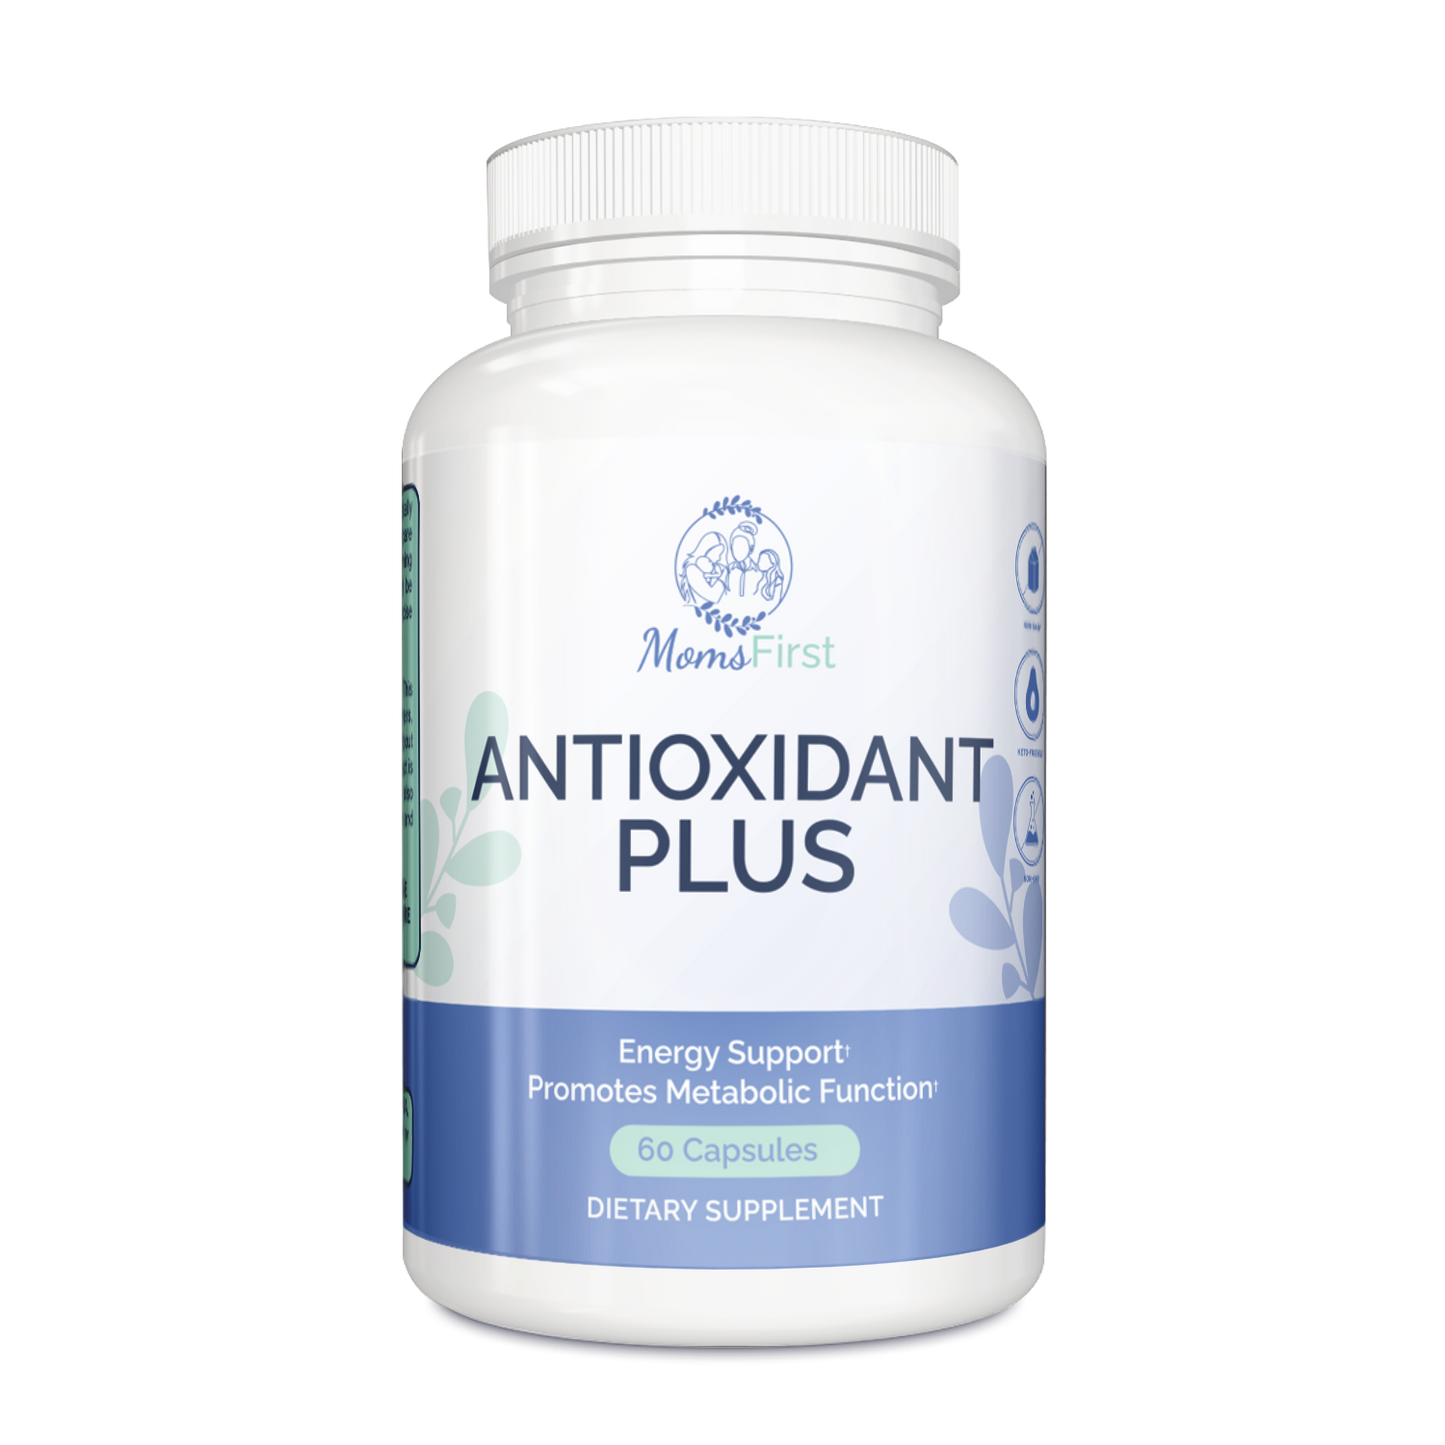 Antioxidant Plus